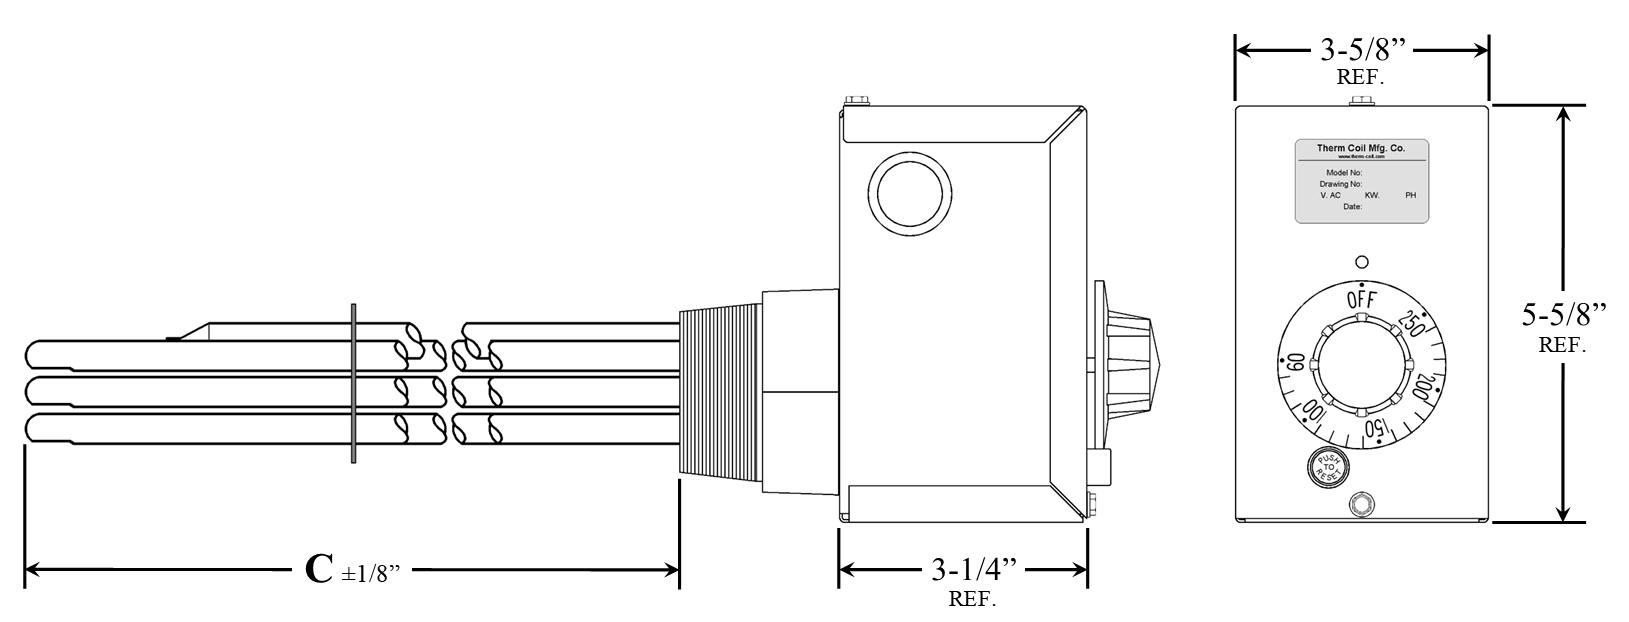 HA-7521 Model: 7500W @ 208V 1-Phase, 19" Immersion Length Regulated 2" NPT Commercial Dishwasher Heating Elements